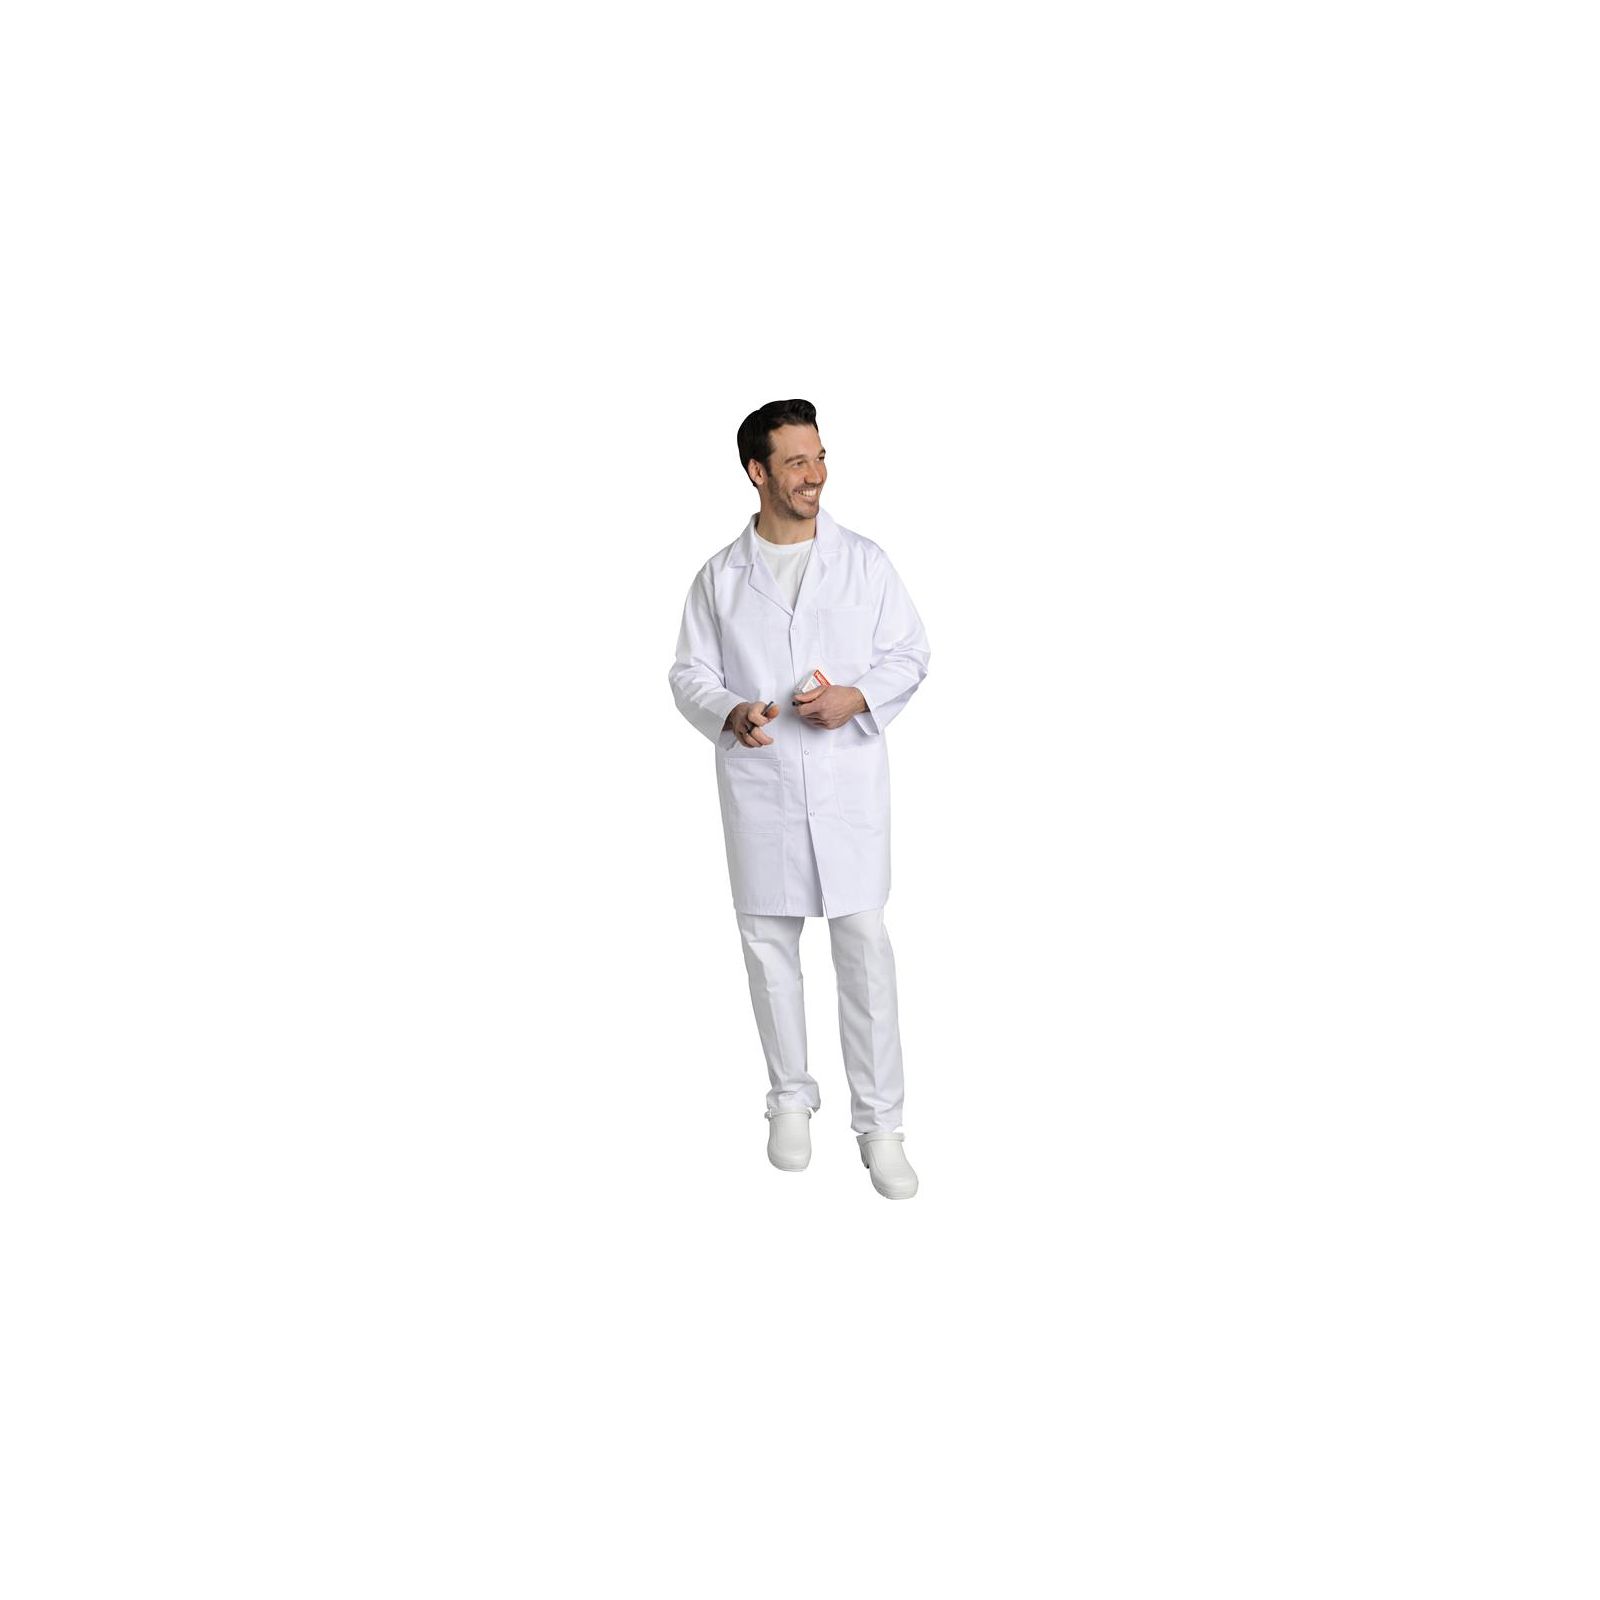 Blouse médicale Homme blanche manches longues Poly/Coton Xavier, SNV (XAVLP00300) vue modele